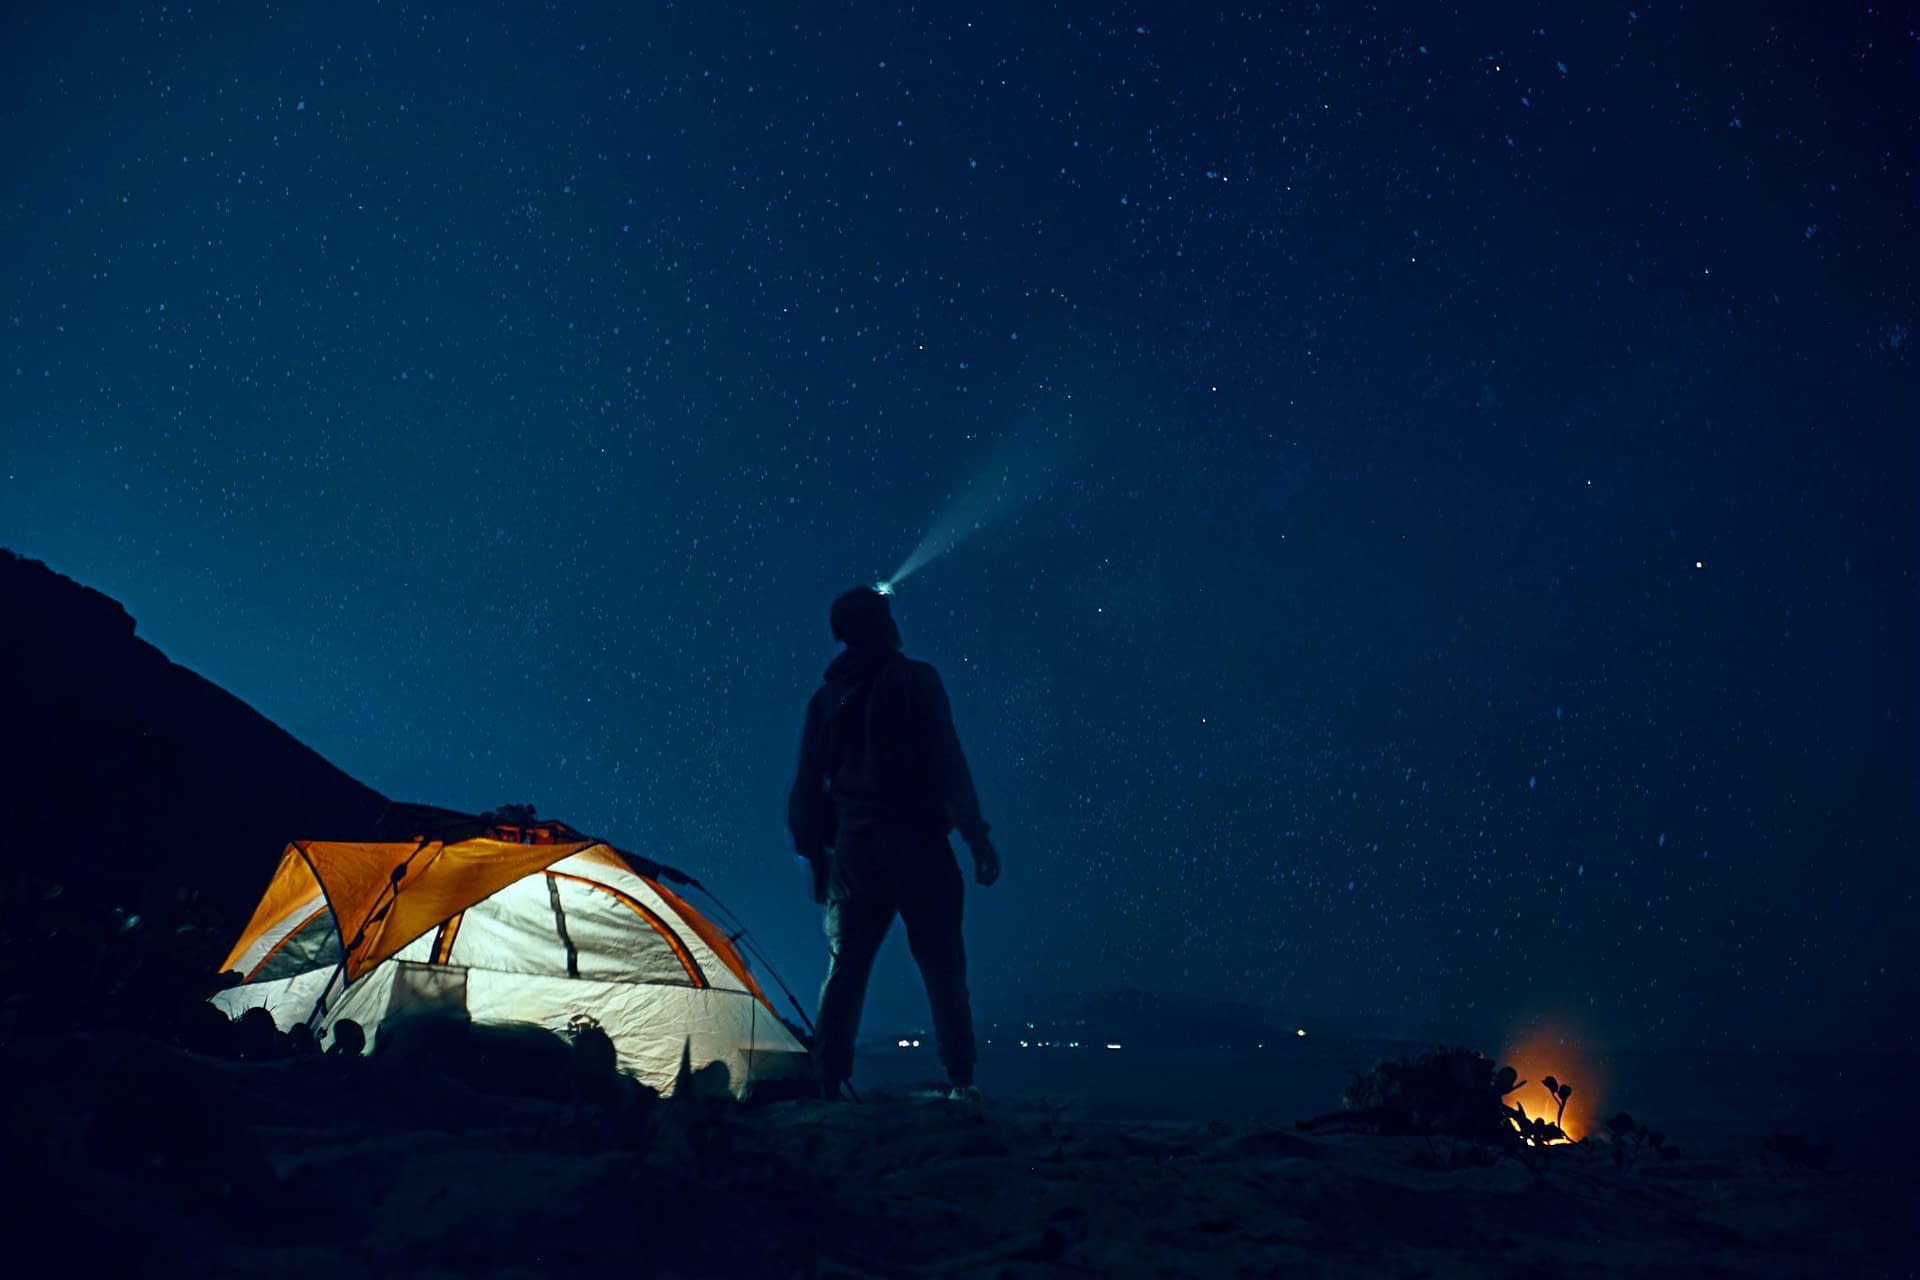 Man stood outside tent at night